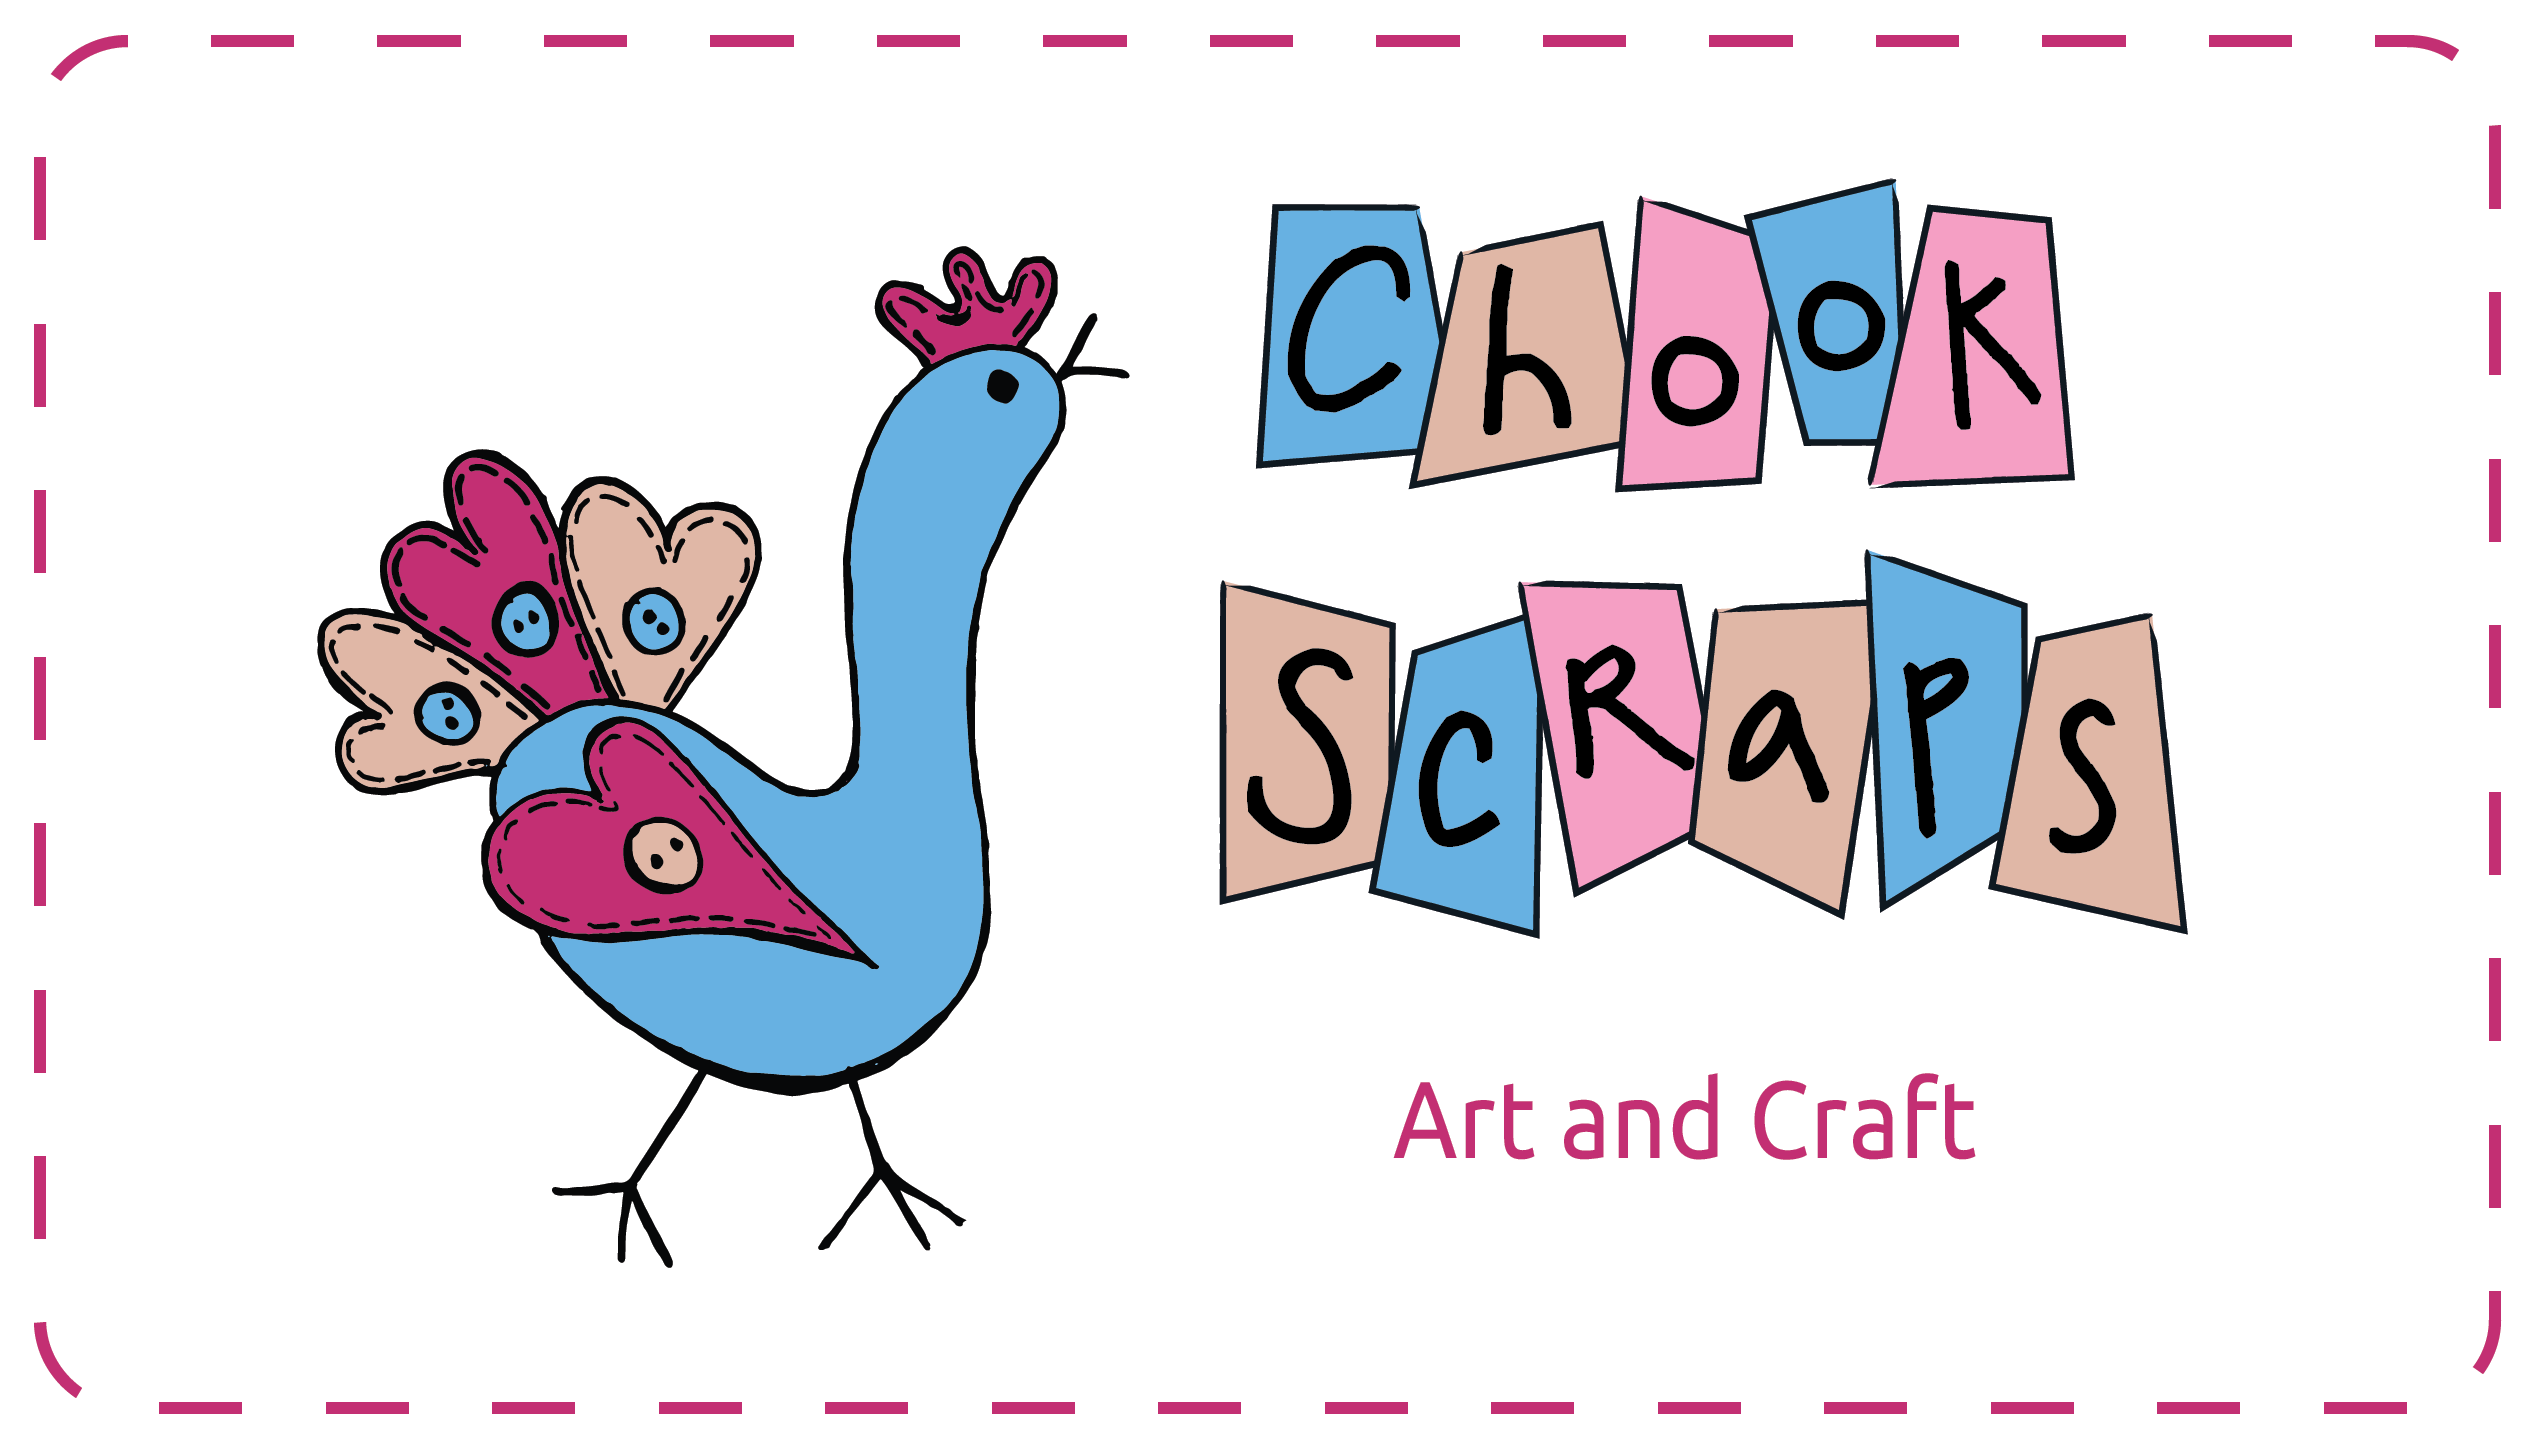 Chook Scraps-02